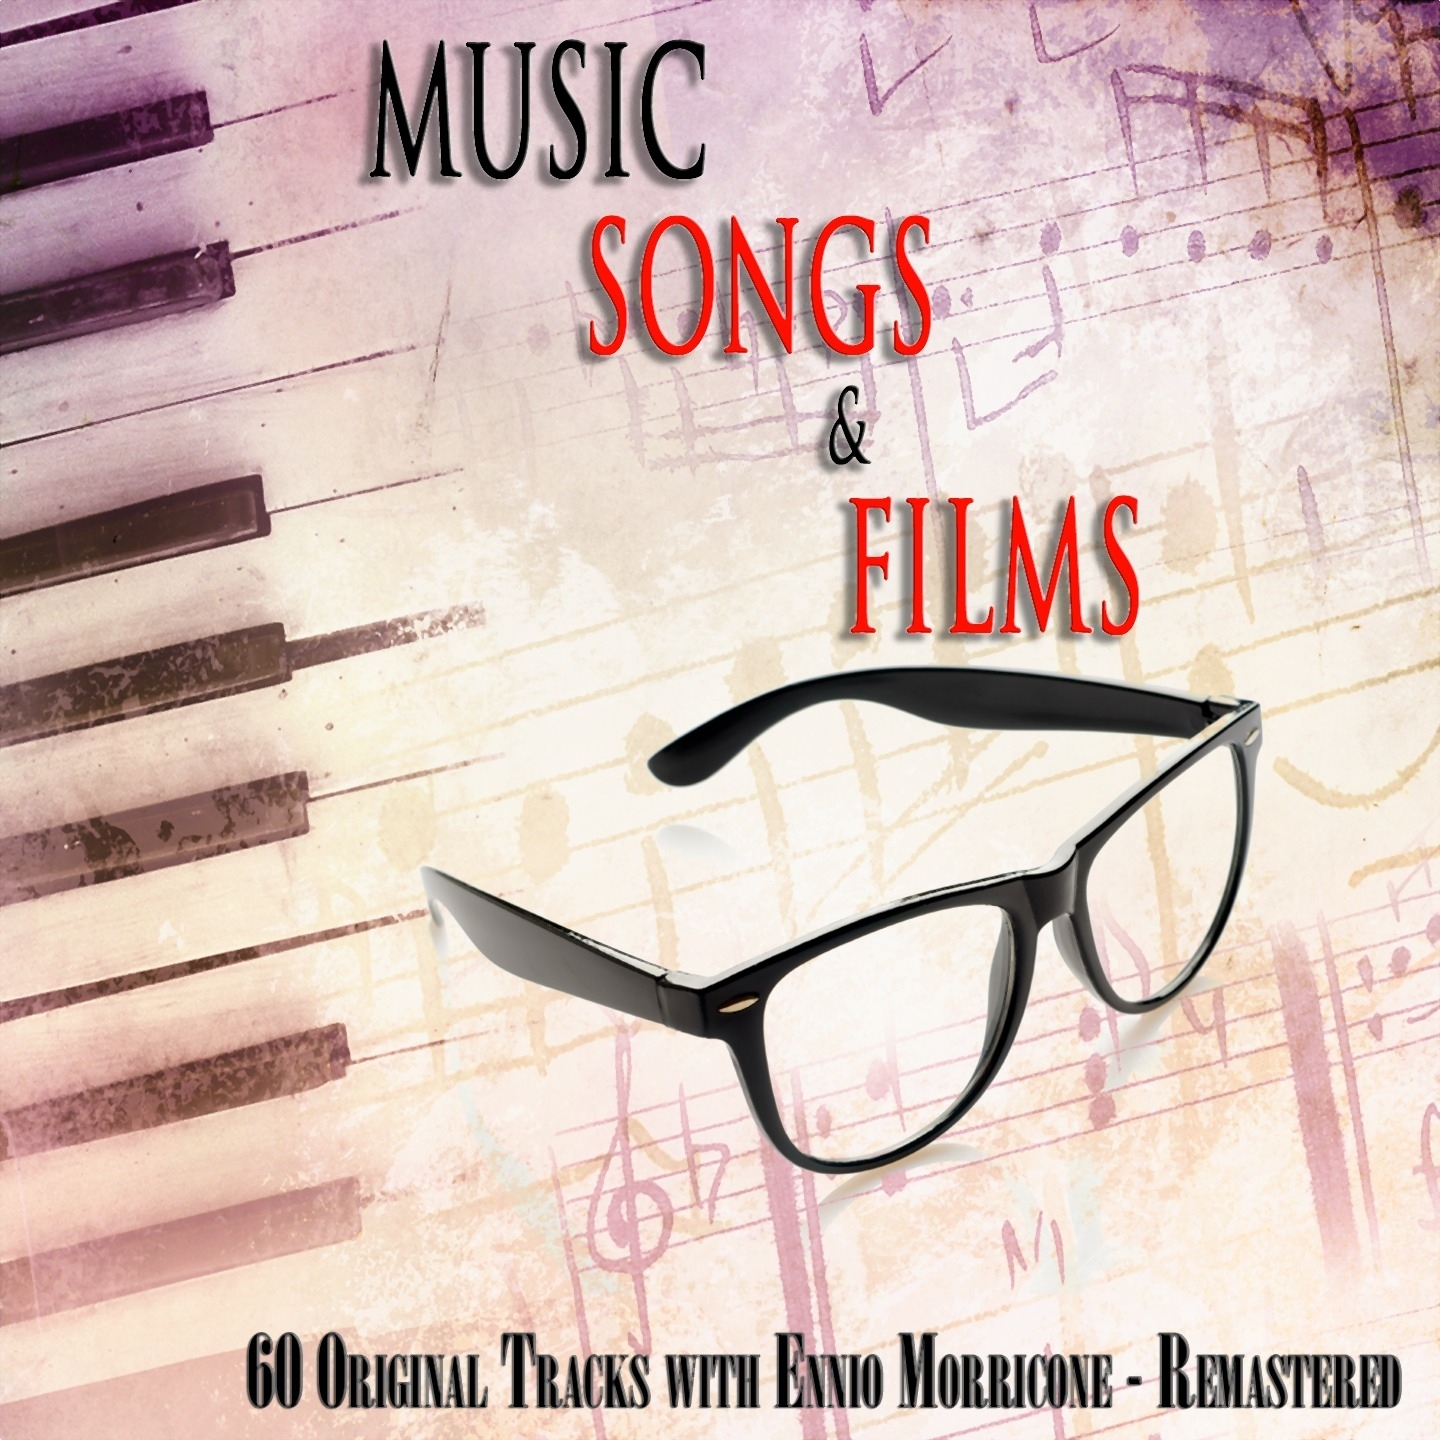 Music, songs & films (60 Original Tracks with Ennio Morricone - Remastered)